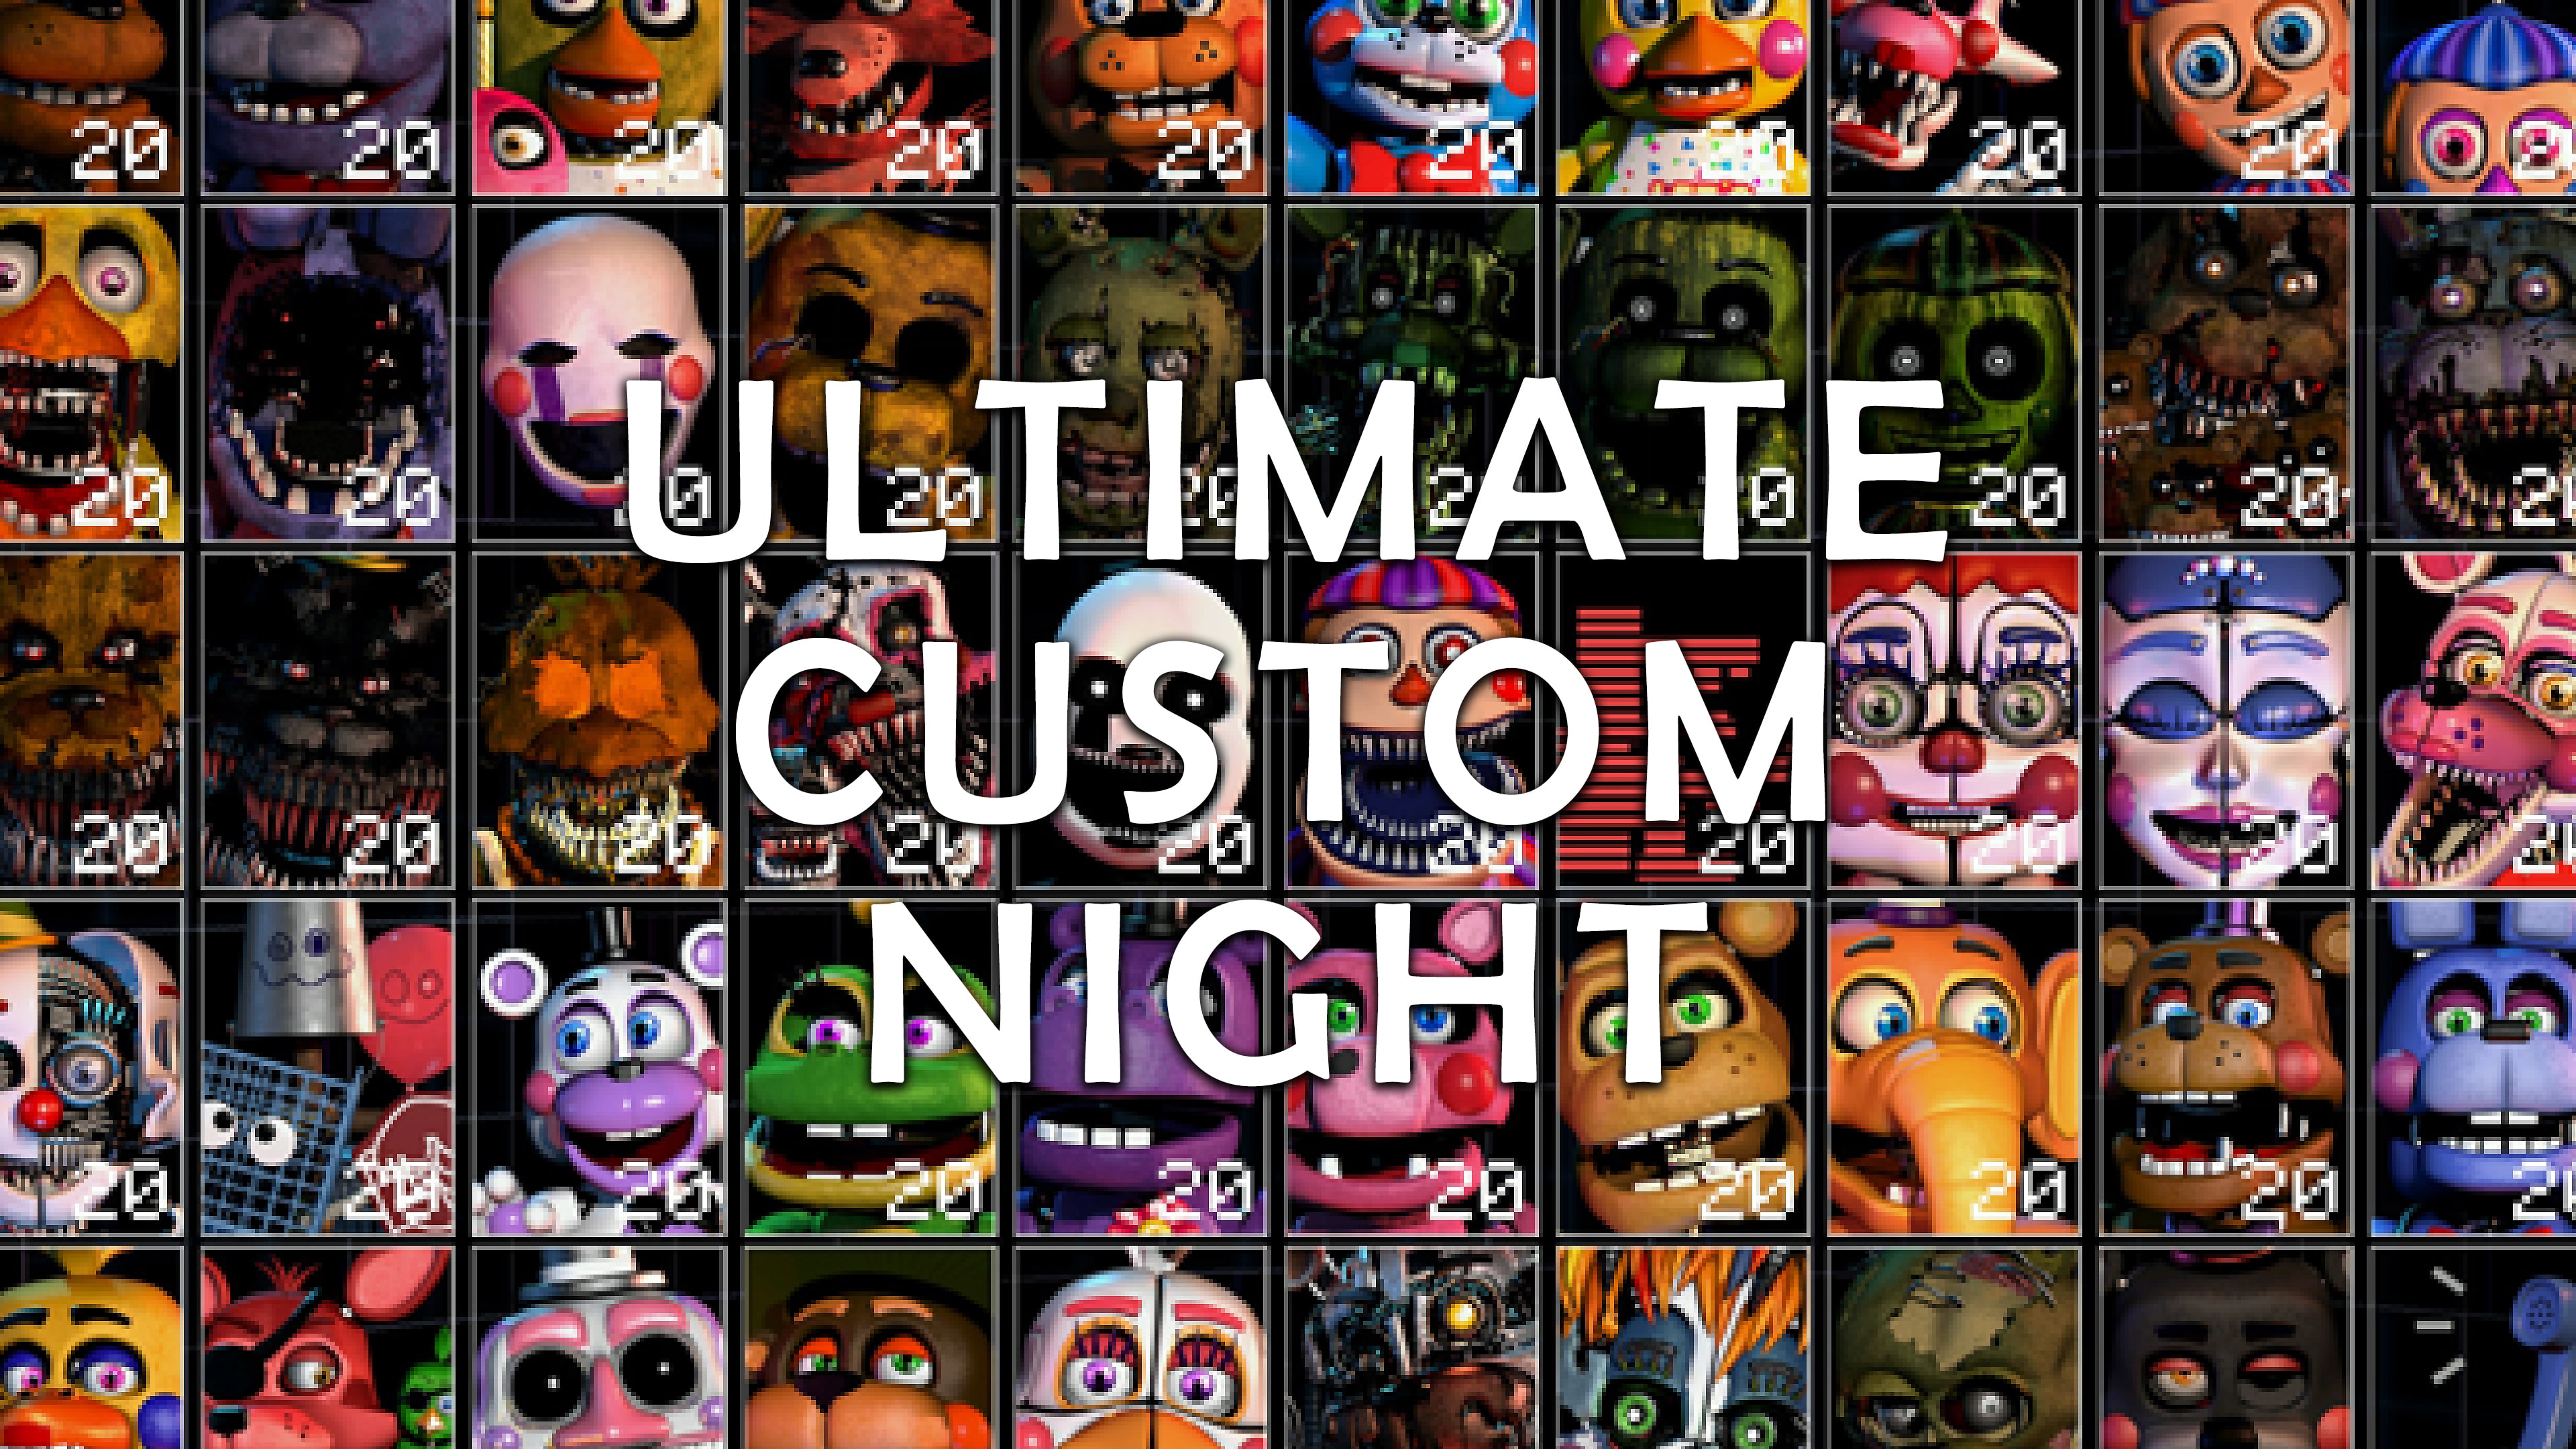 Ultimate Custom Night FNAF WORLD Edition 